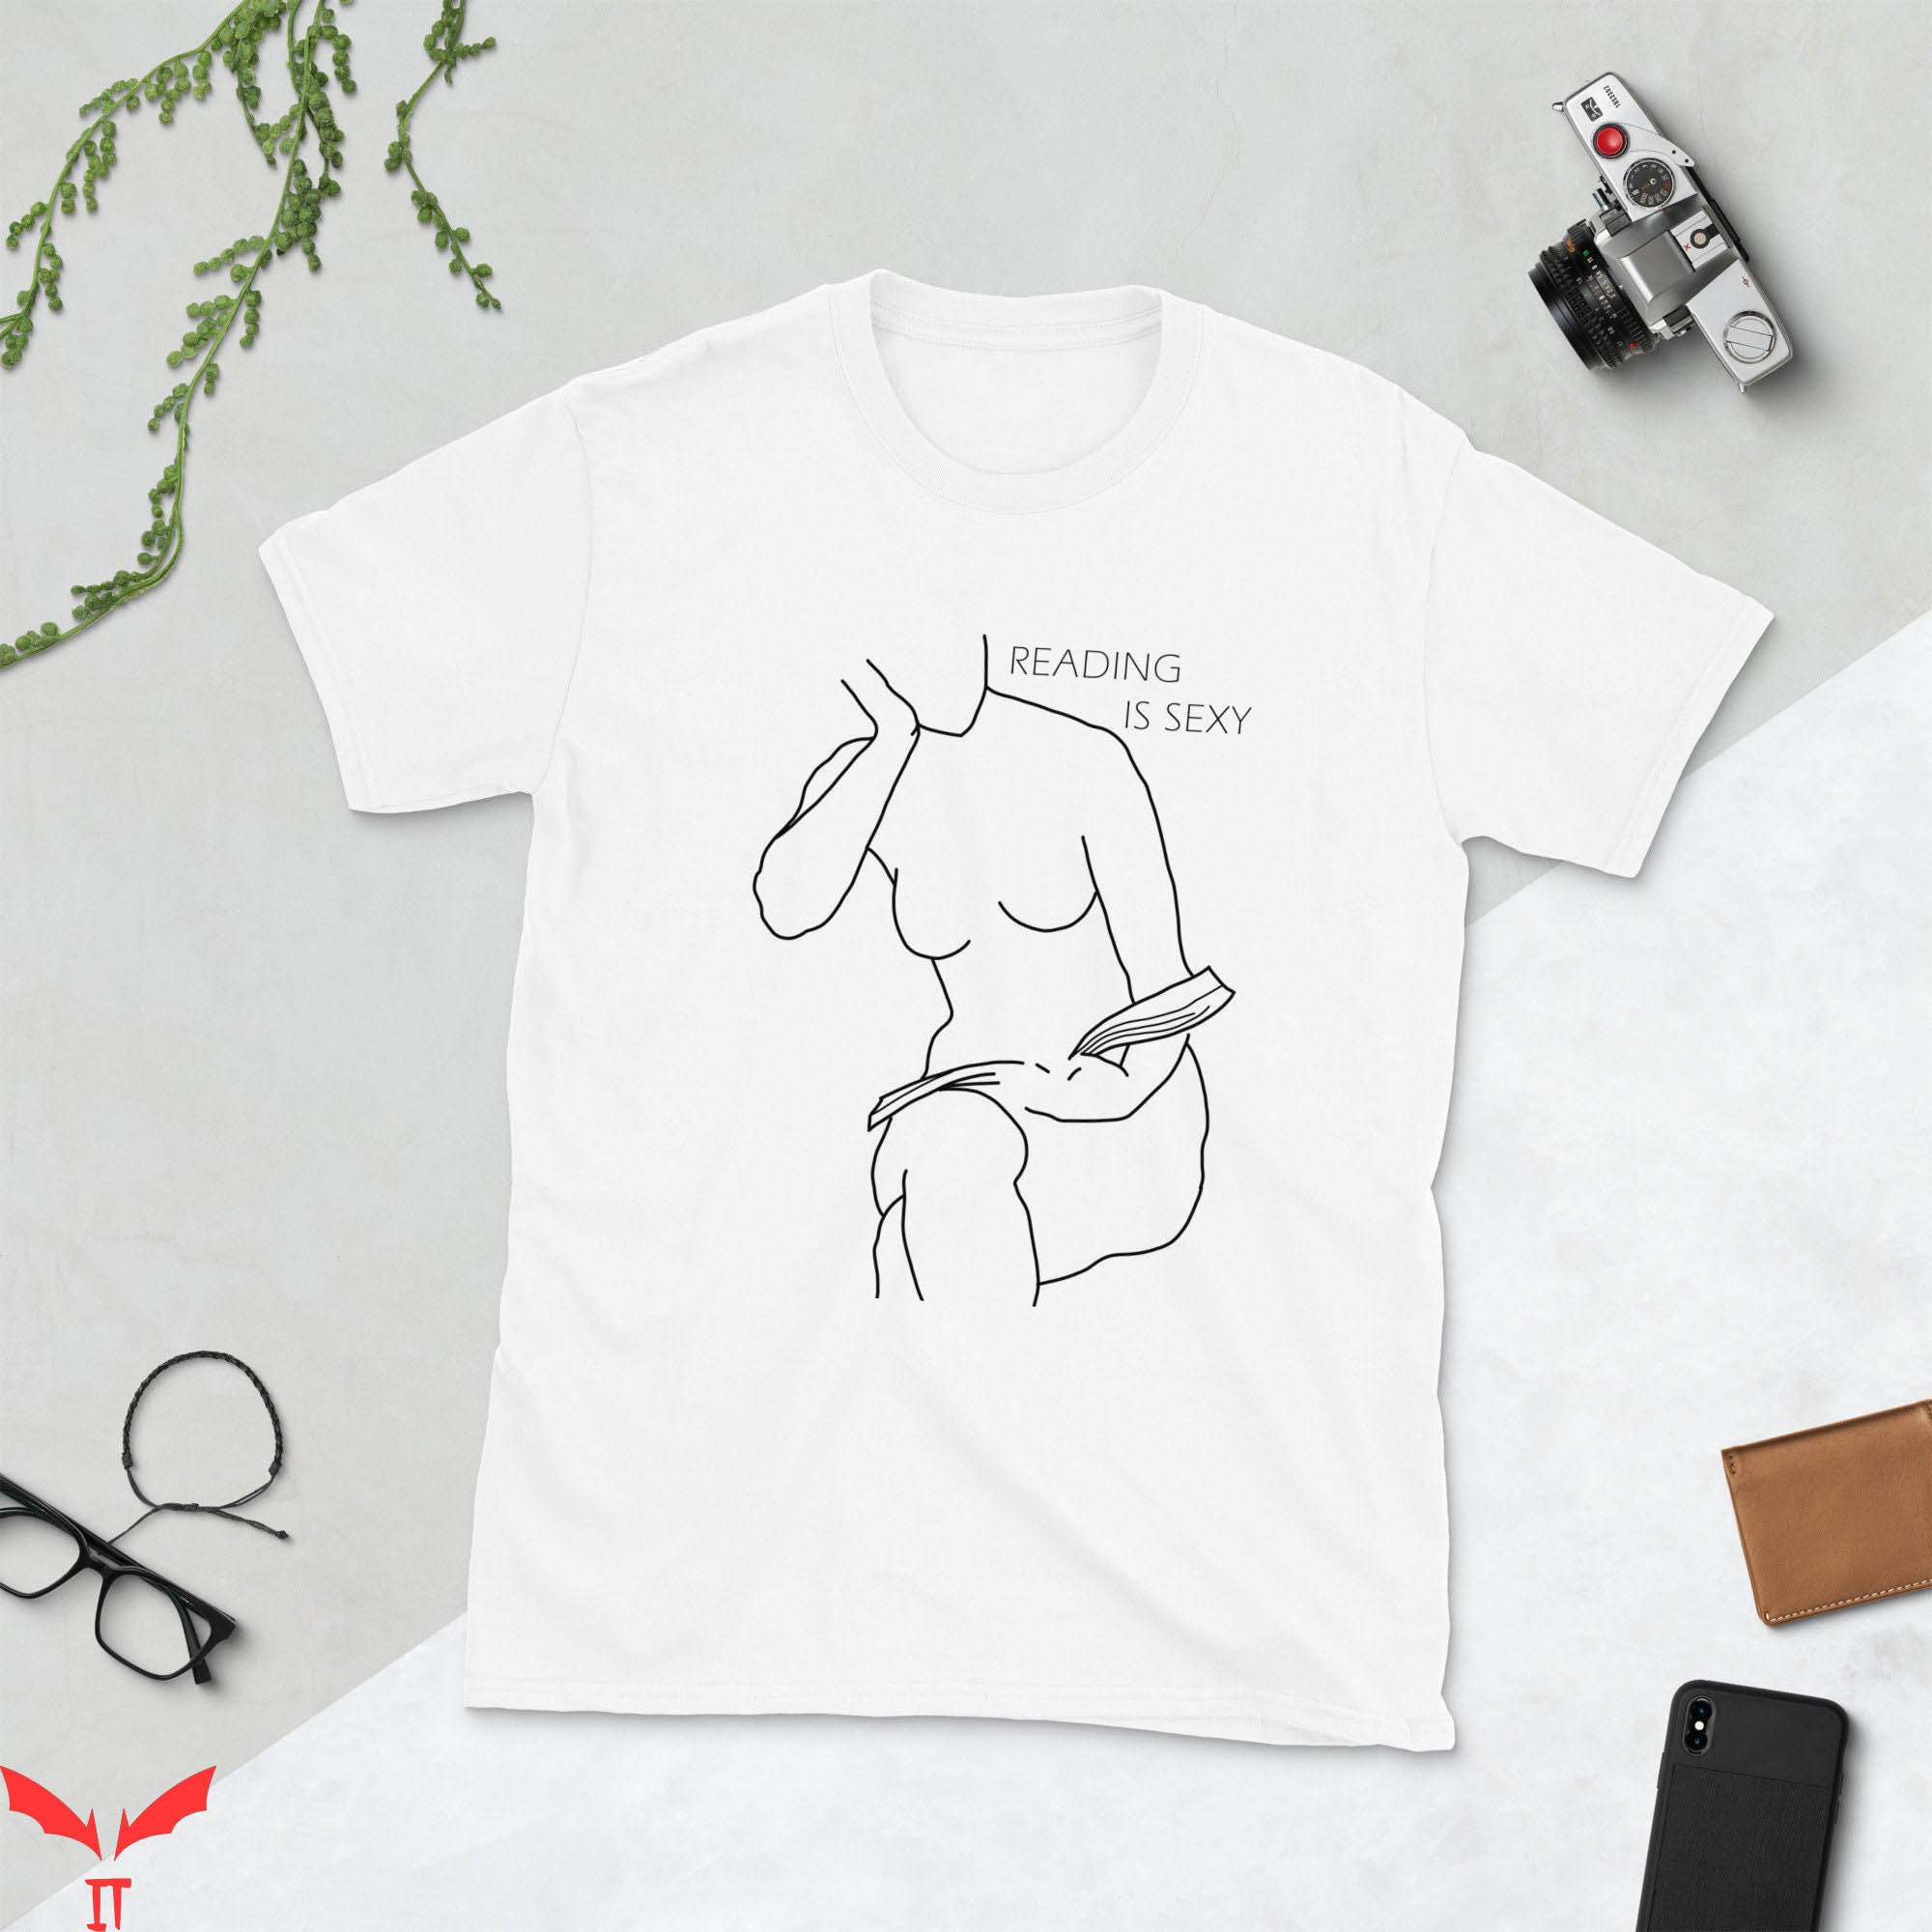 Reading Is Sexy T-Shirt Minimalist Woman Body Line Art